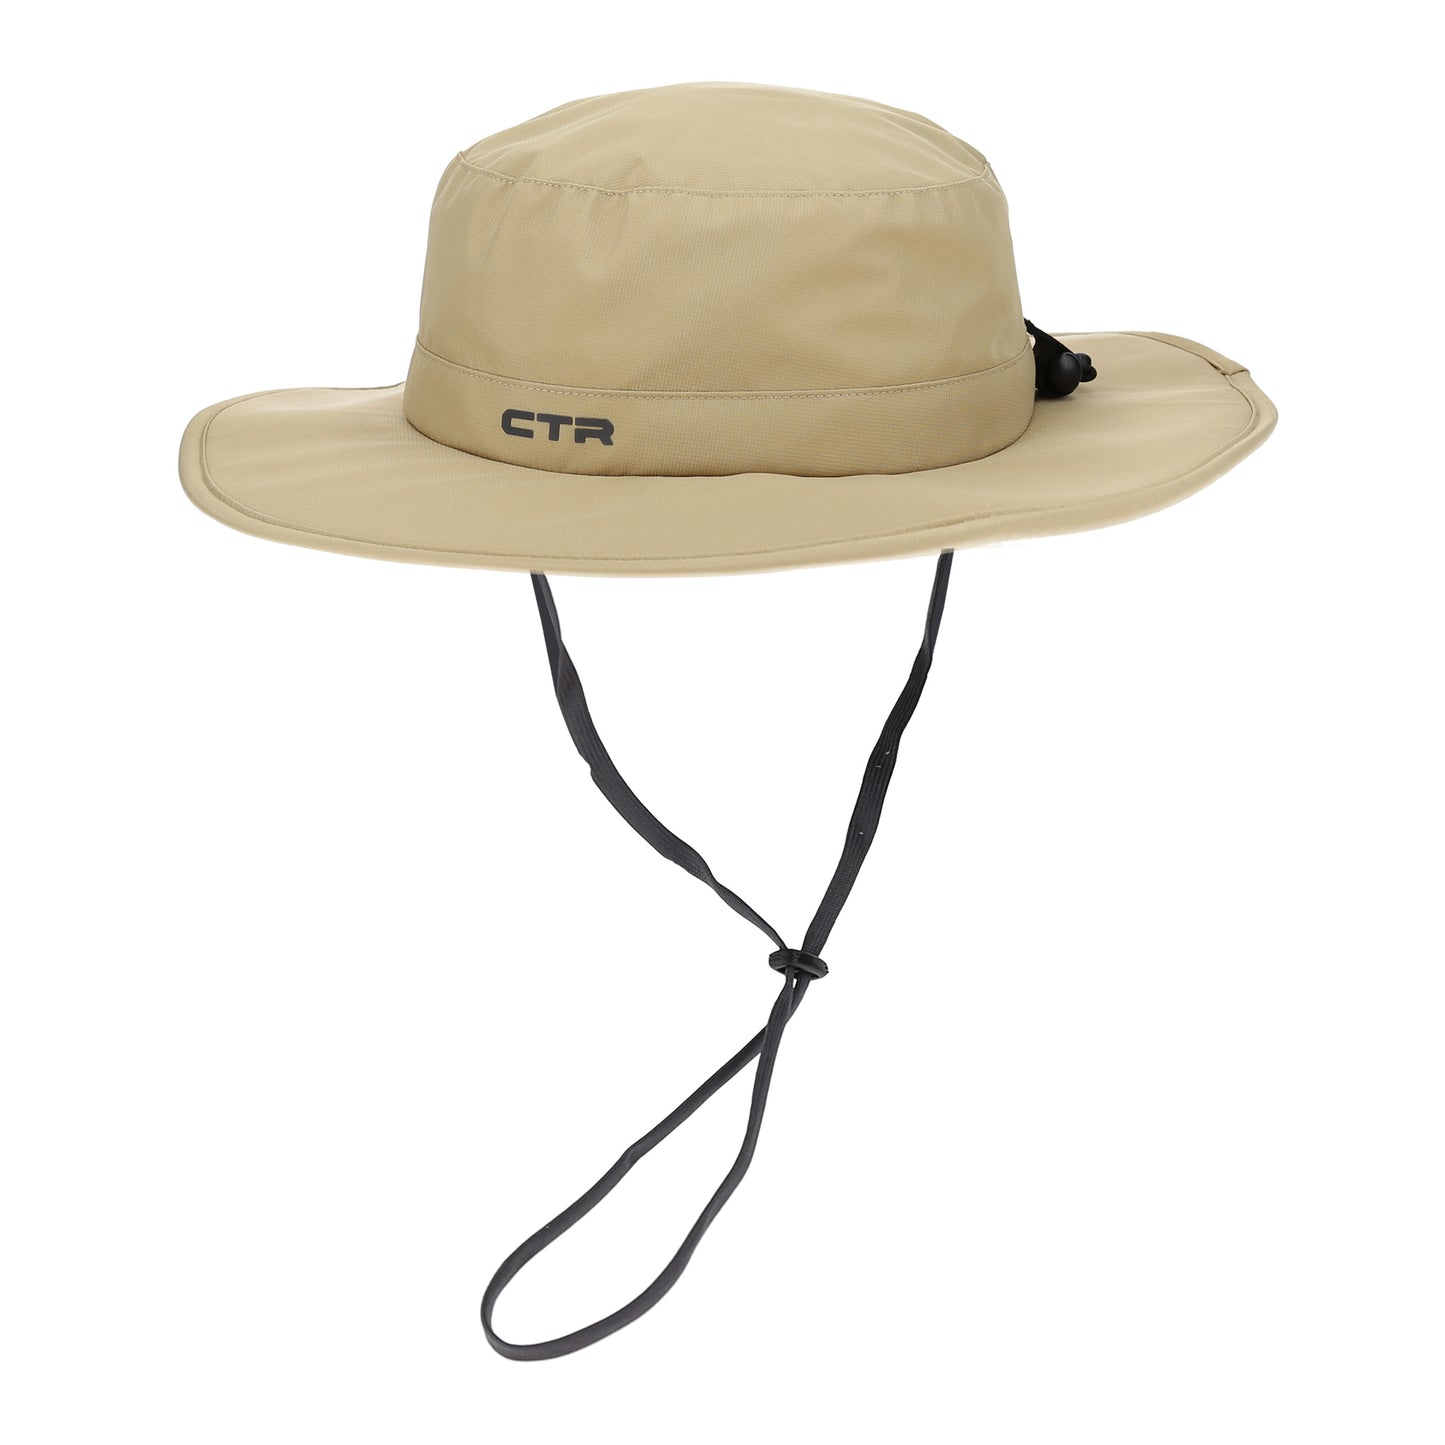 Stratus Cloud Burst Hat CTR Style:1855-Bucket Hat-CTR Outdoors